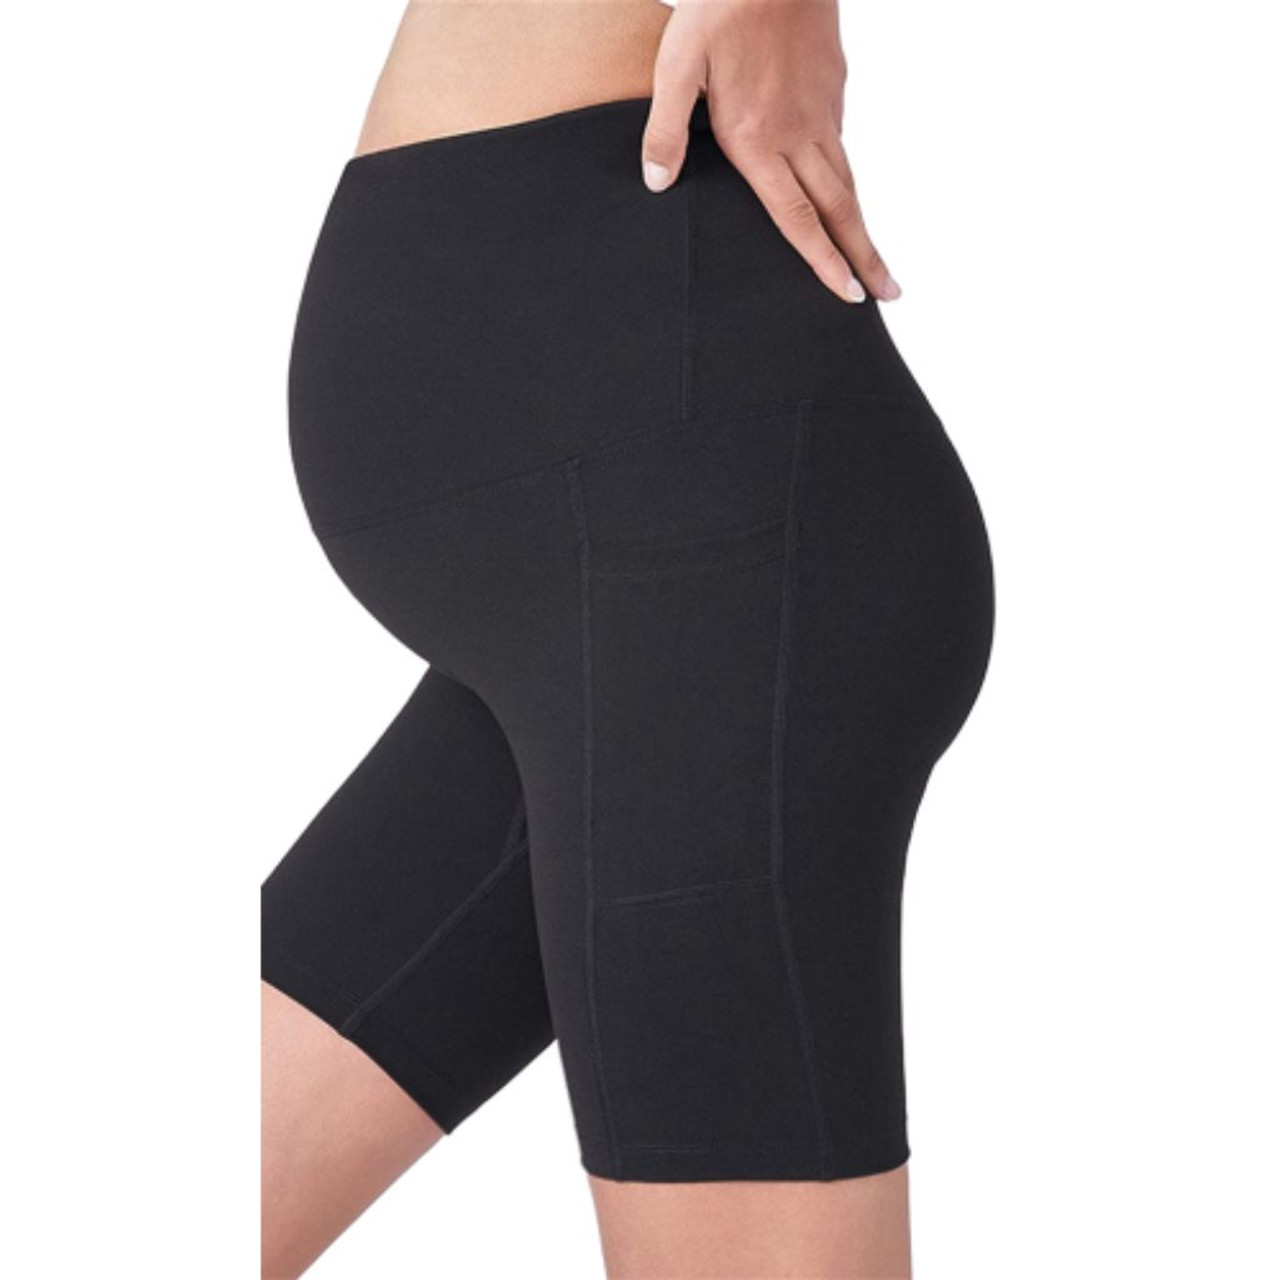 N'Polar™ Women's Maternity Shorts product image